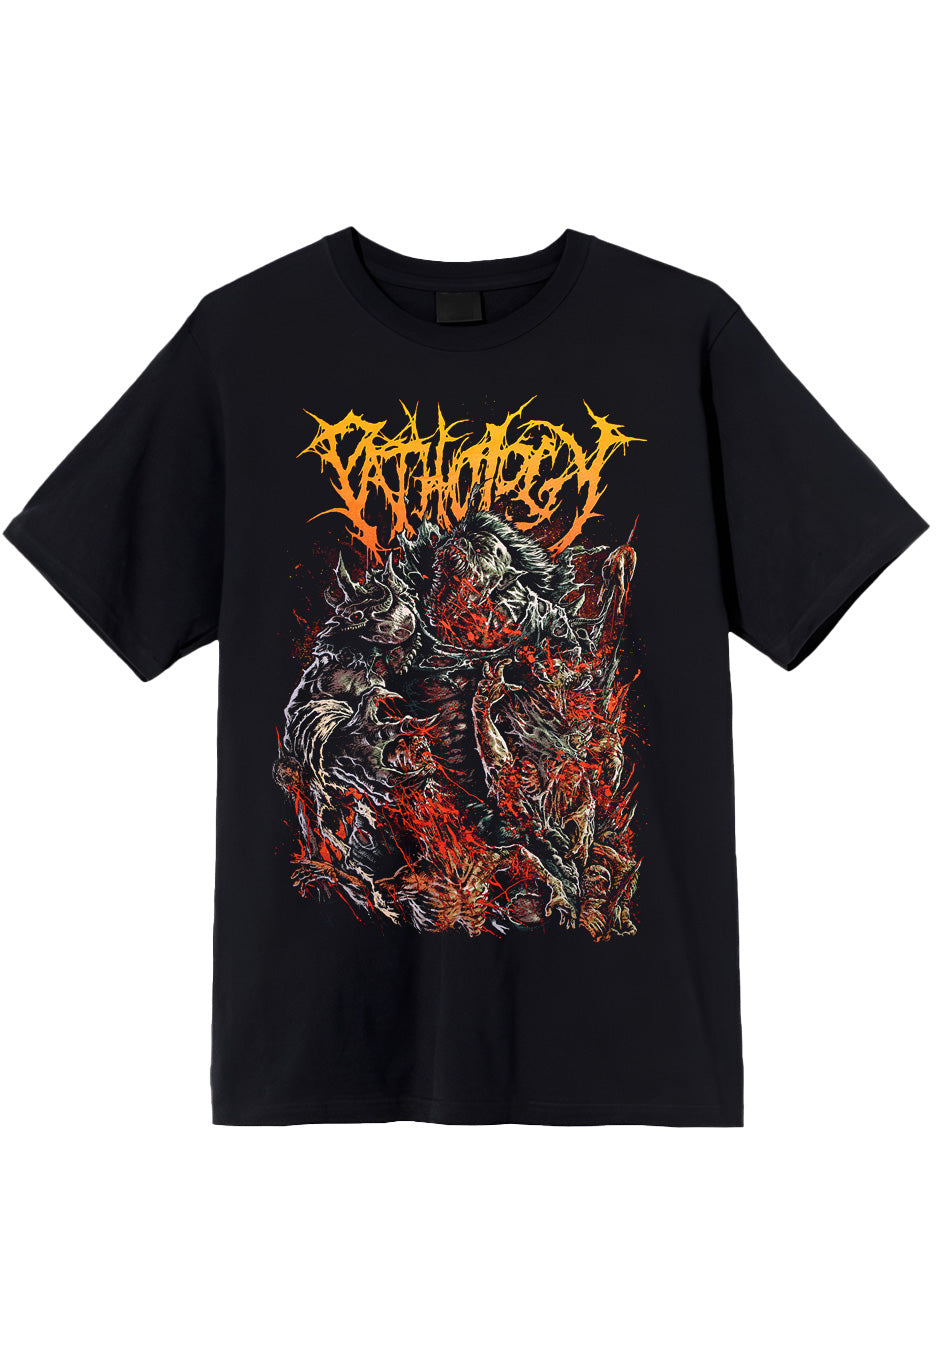 Pathology - Rawhead - T-Shirt